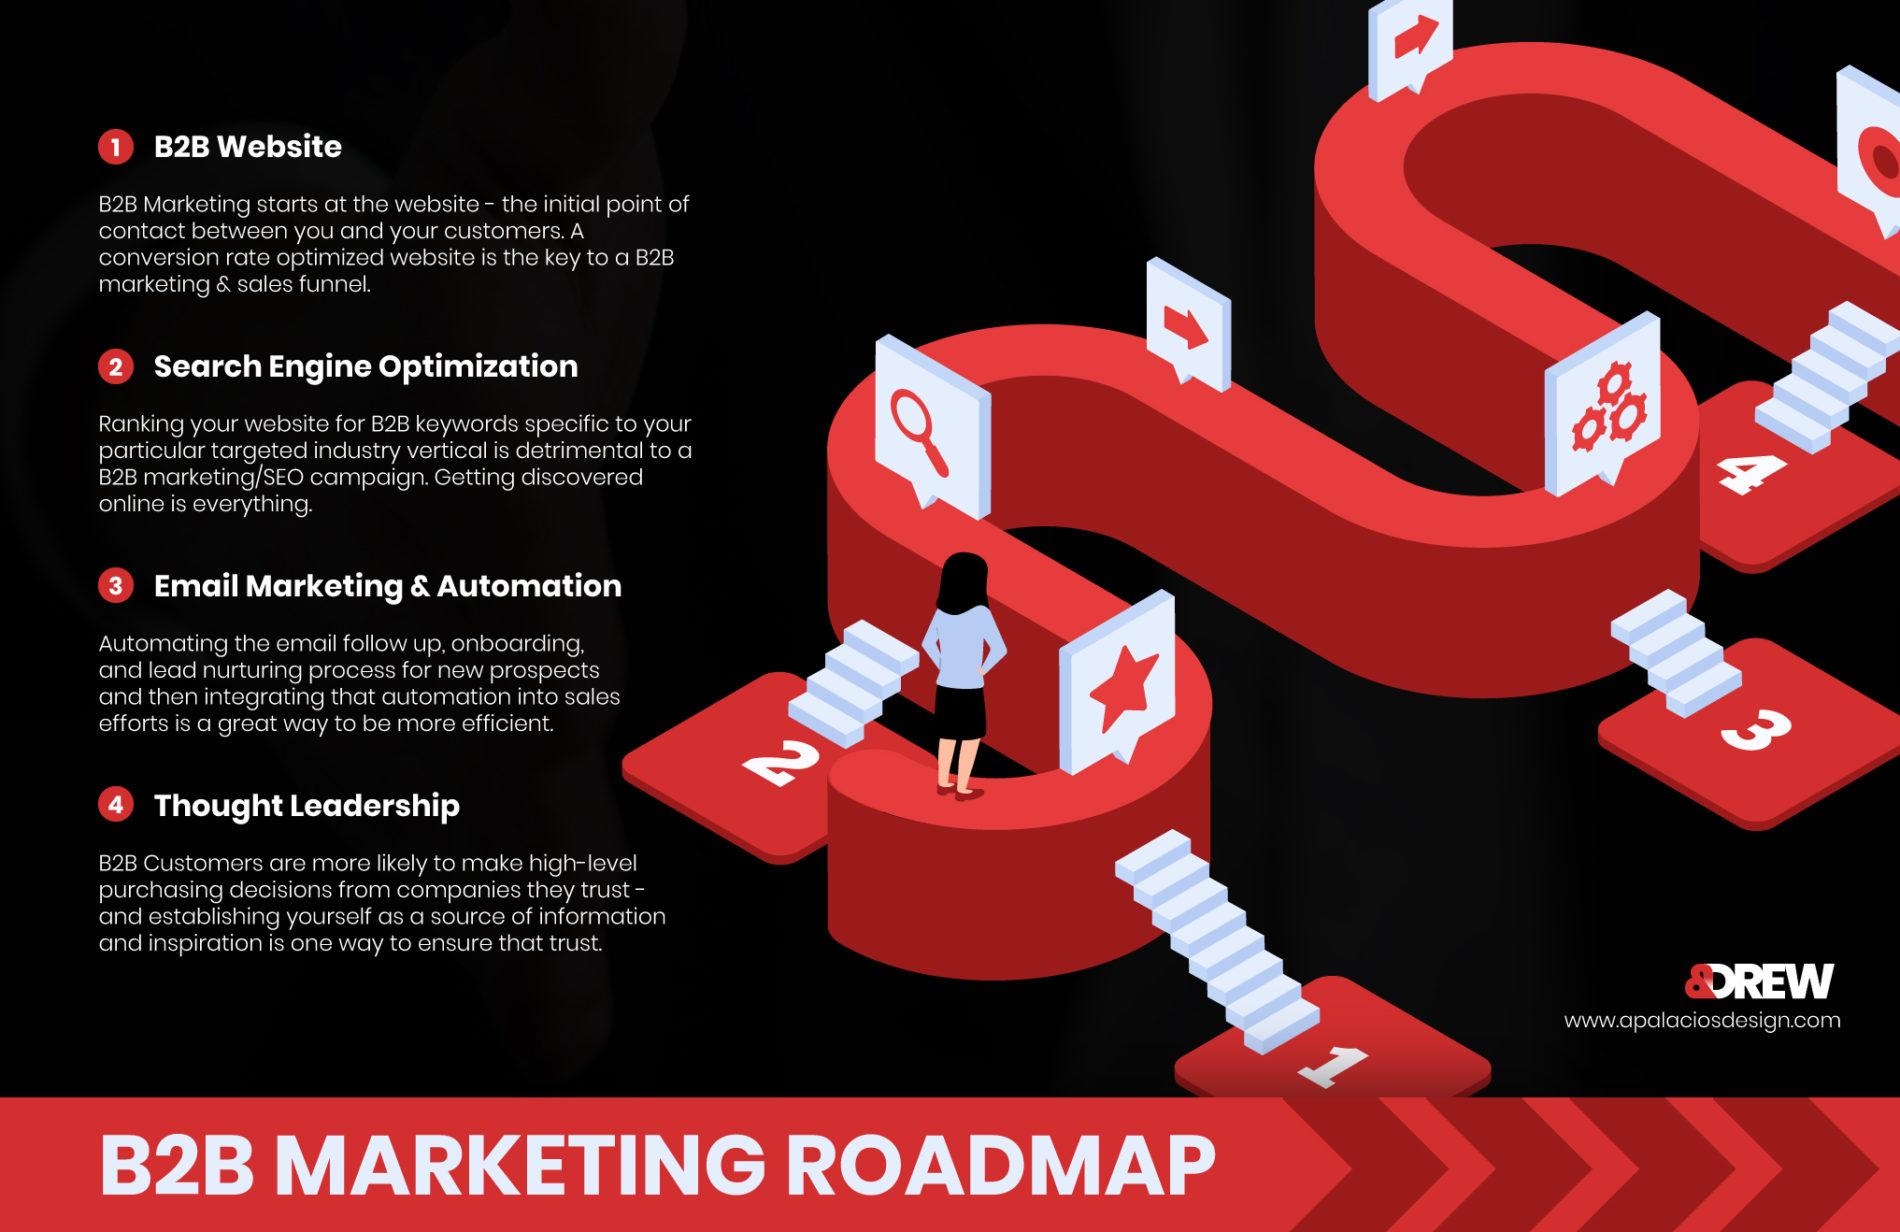 B2B marketing roadmap infographic B2B Marketing Explained What Is B2B marketing?